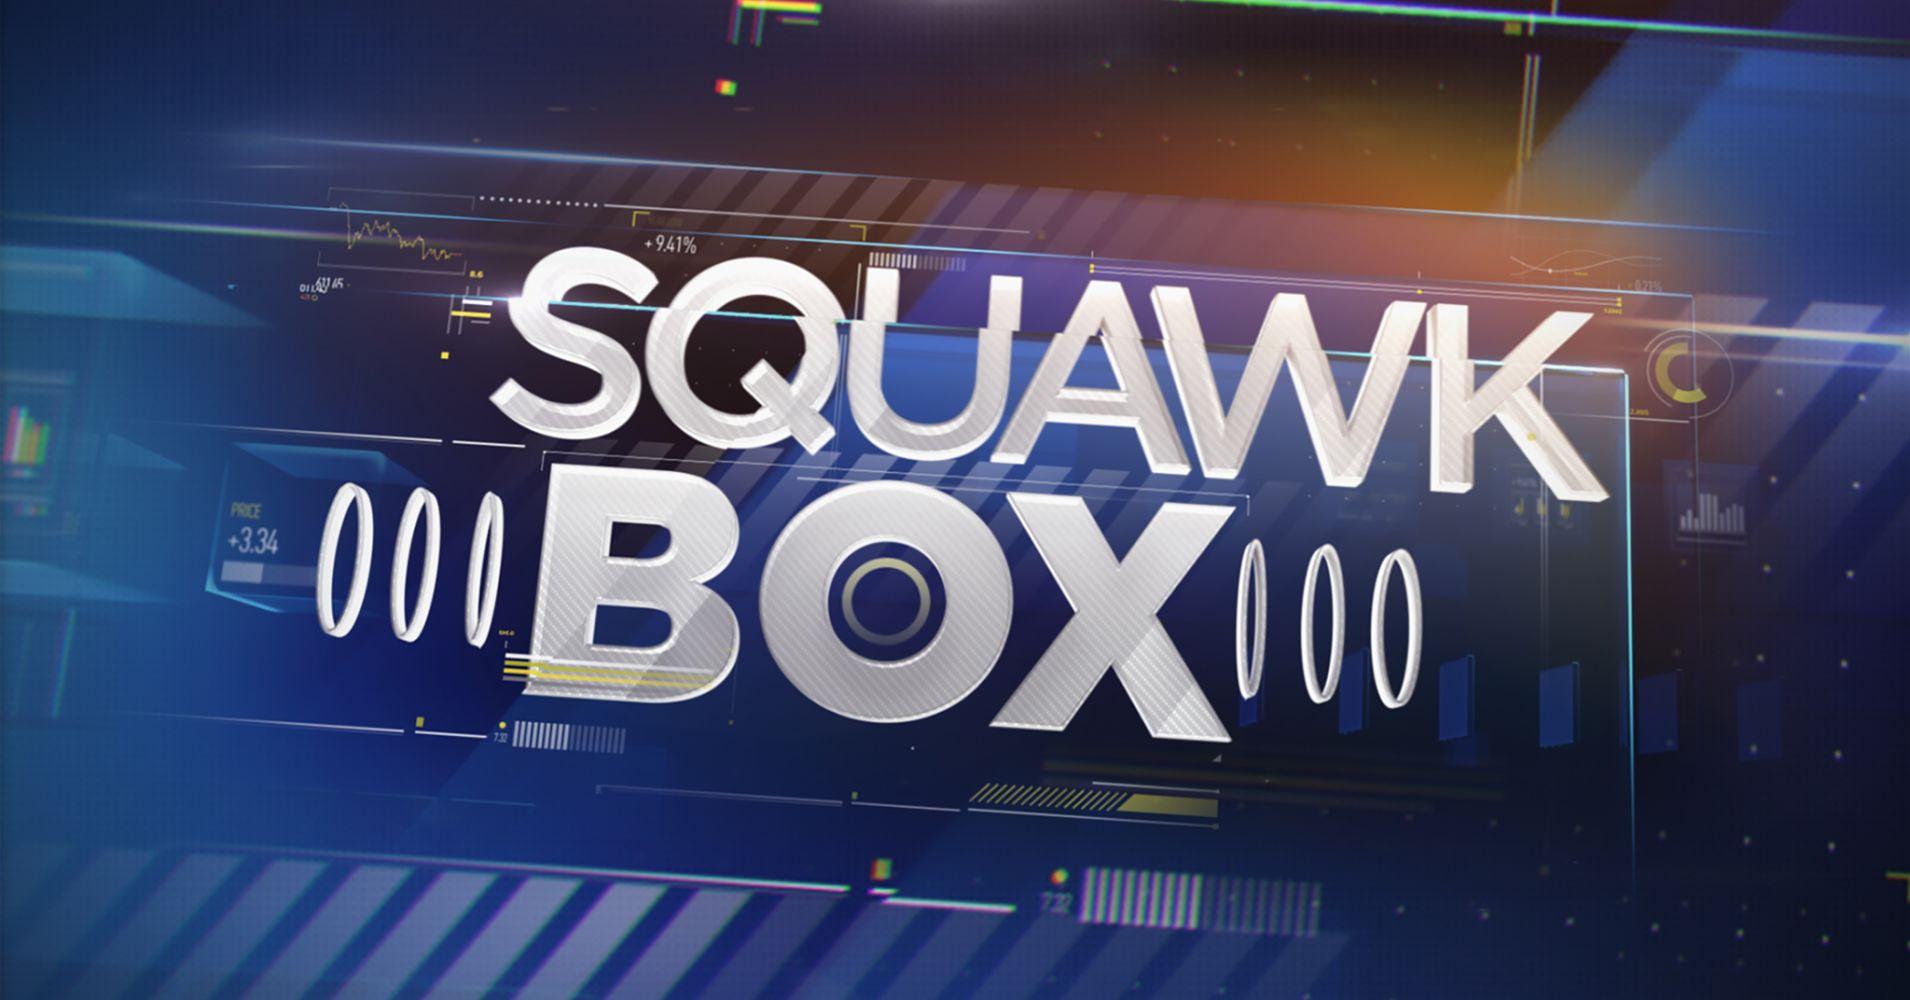 BX Ox Logo - Squawk Box: Business, Politics, Investors and Traders